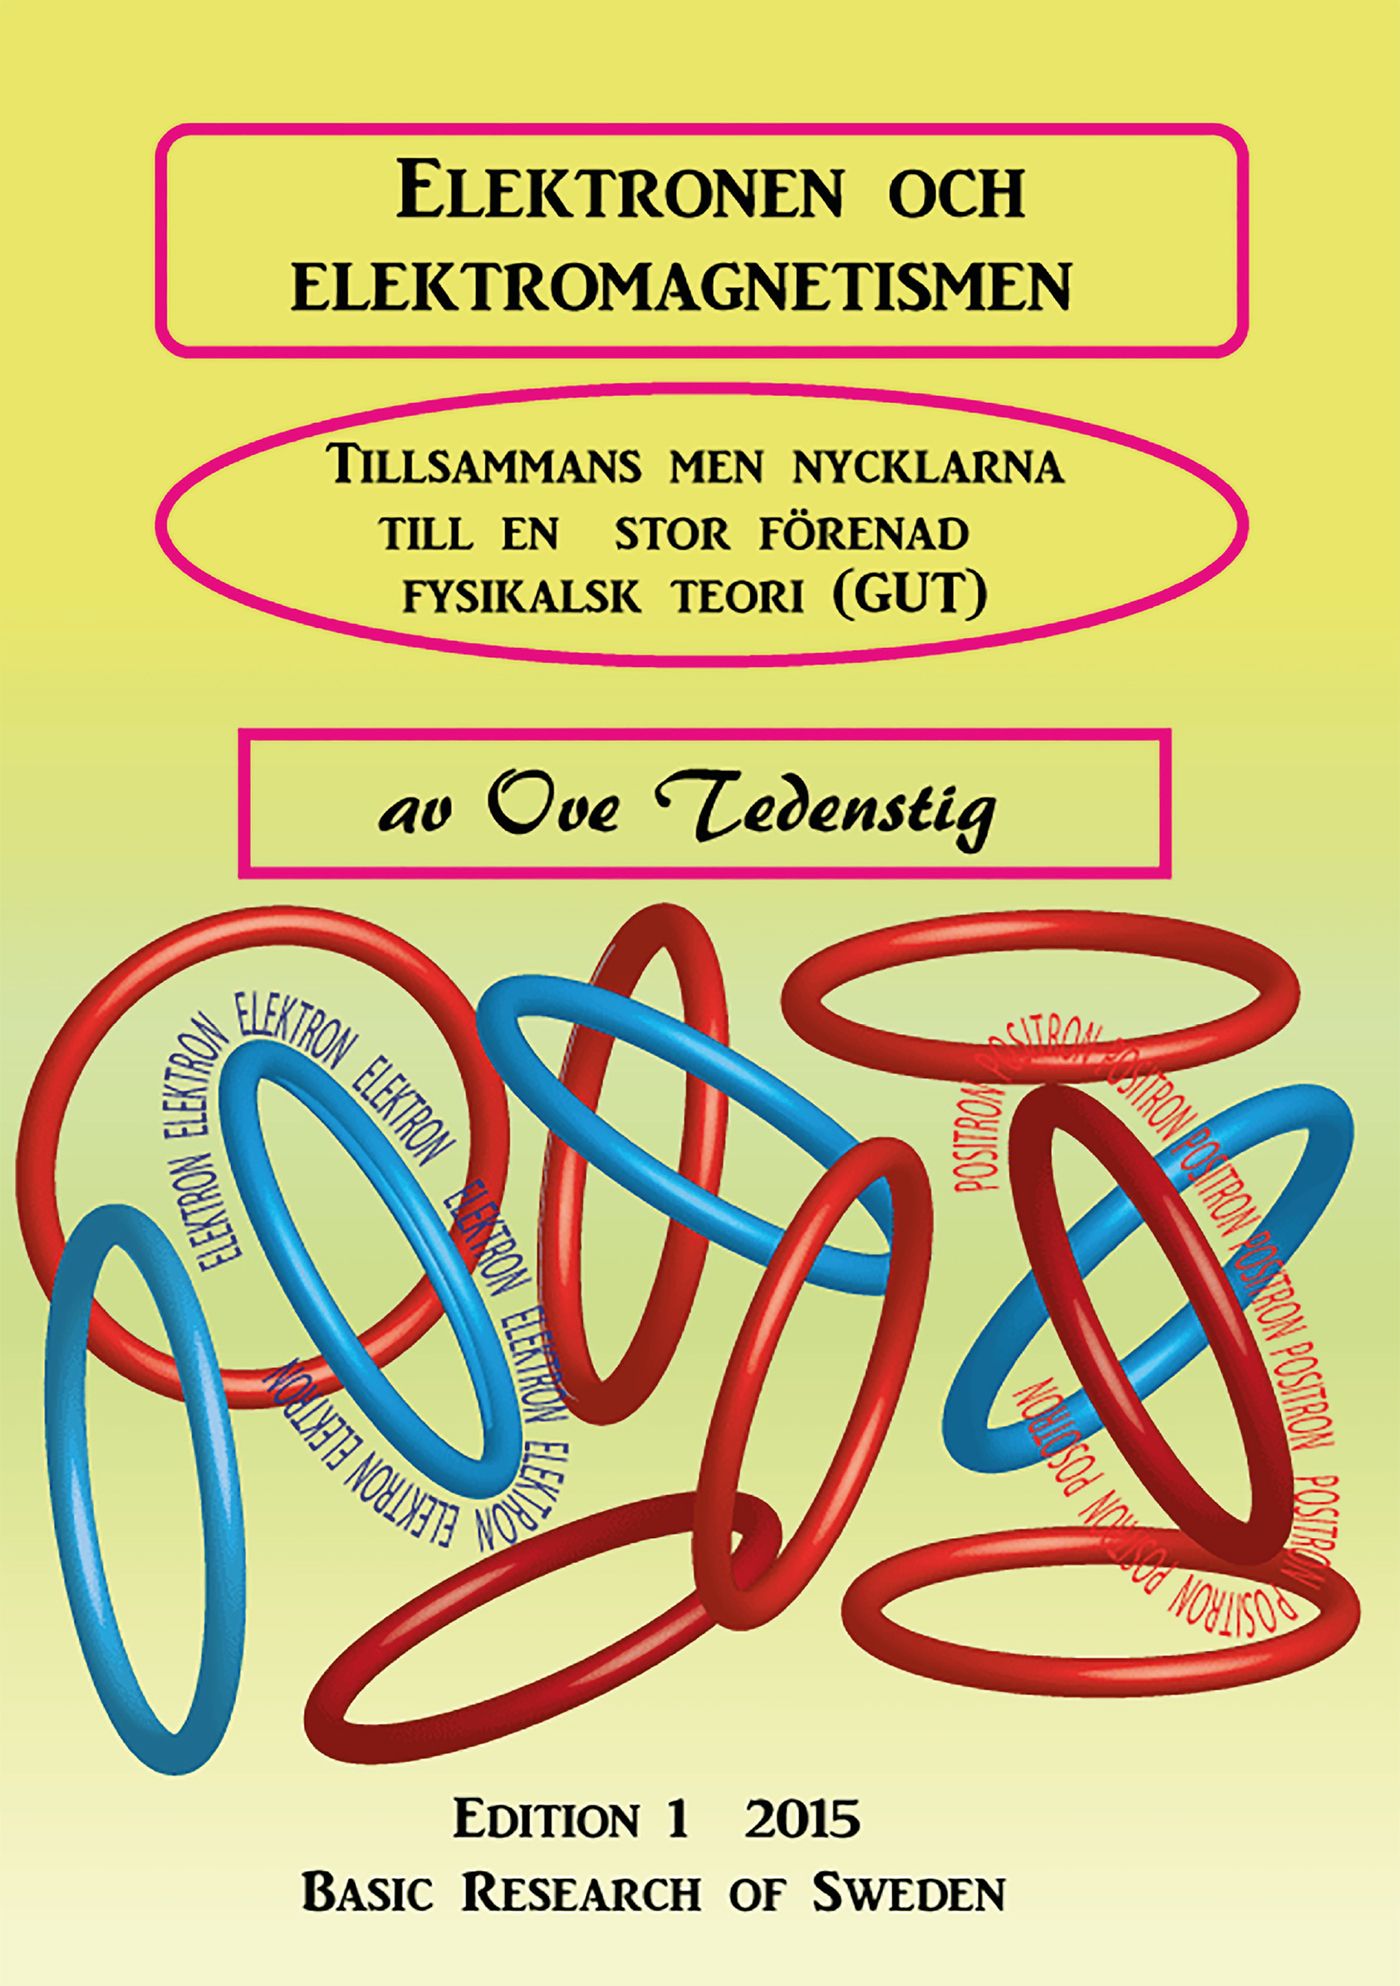 Elektronen och Elektromagnetismen, e-bog af Ove Tedenstig